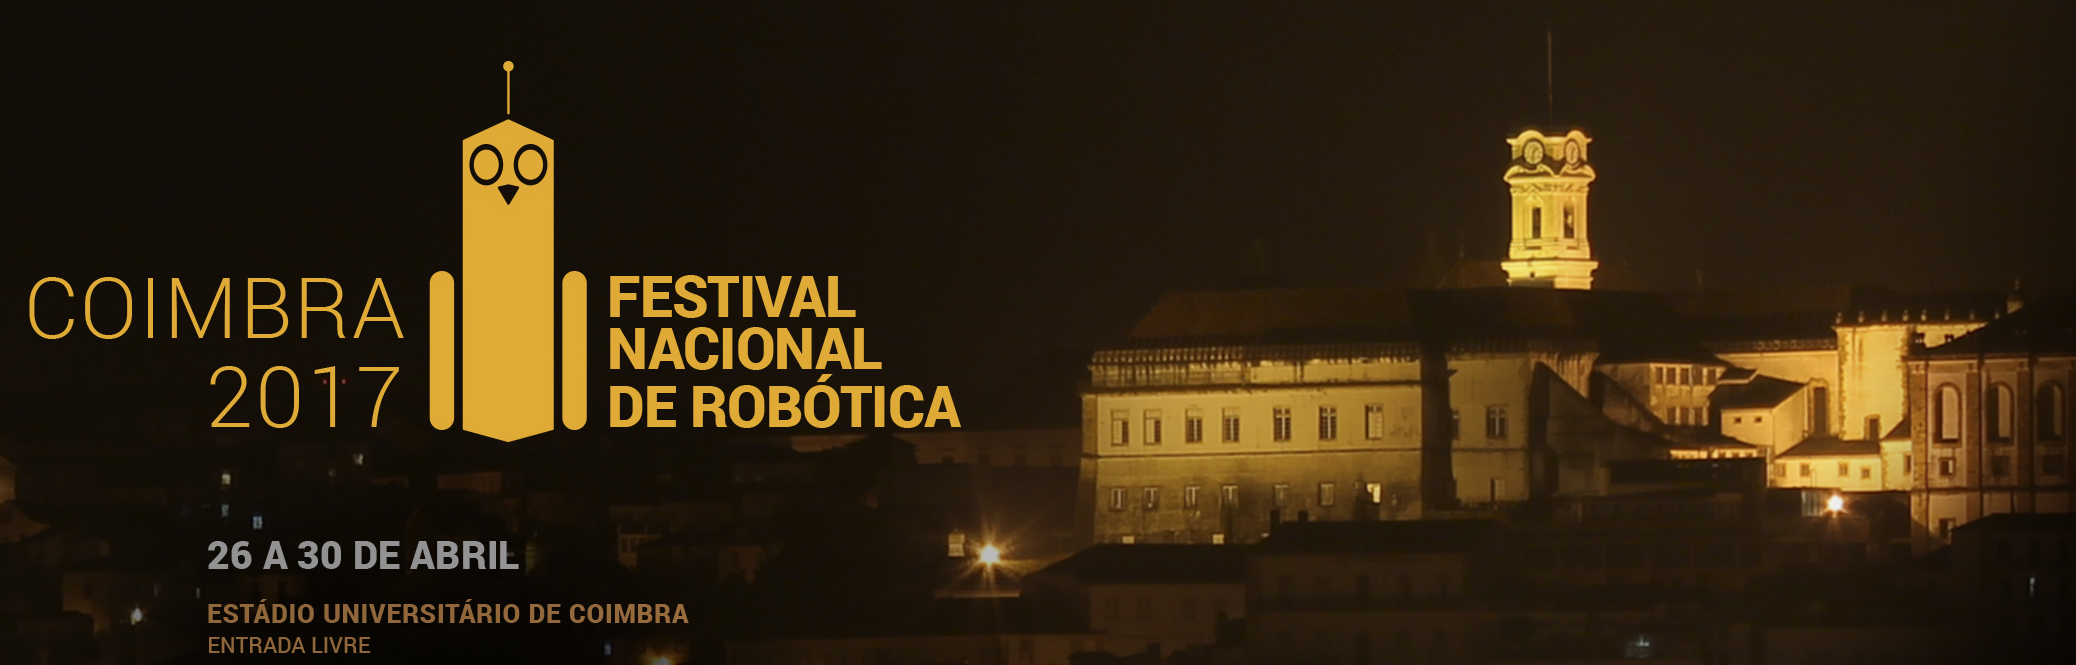 Festival Nacional de Robótica 2017